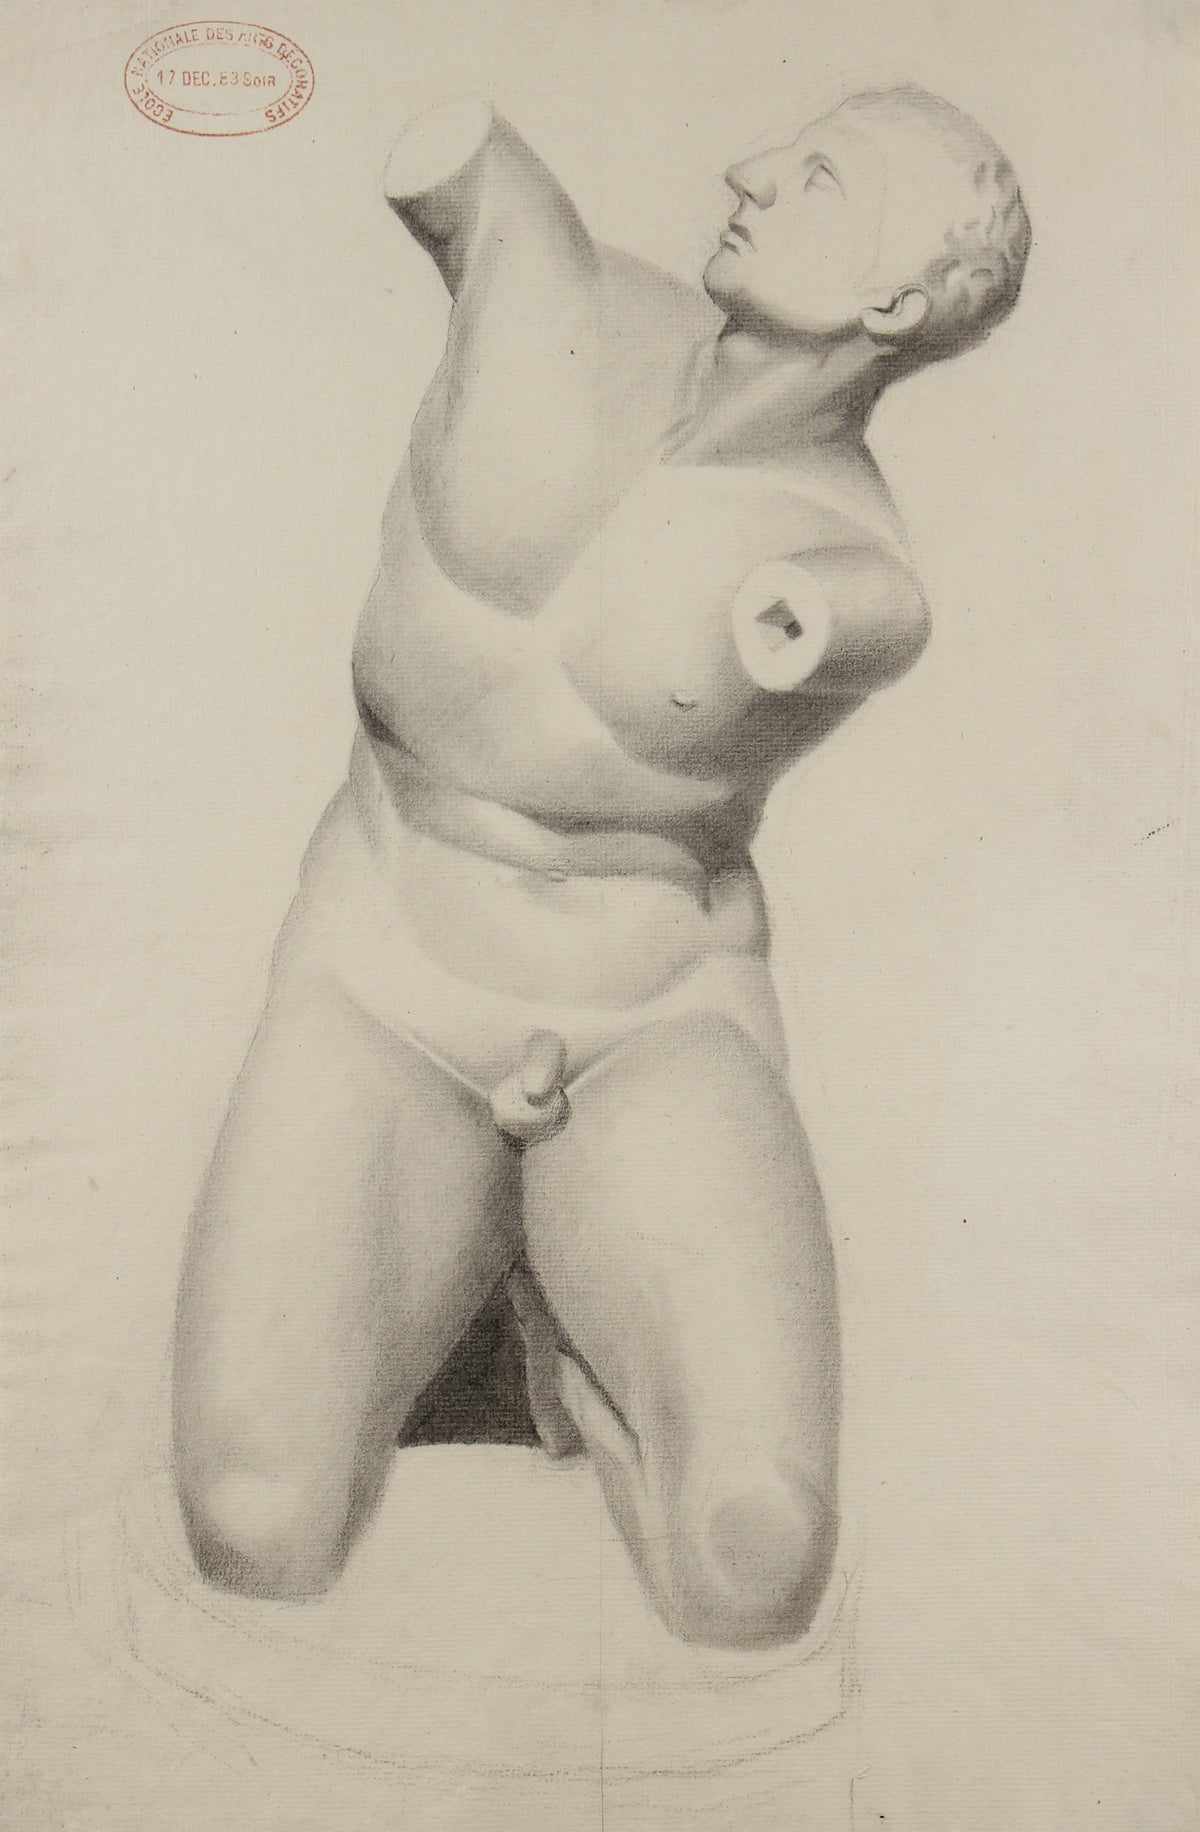 French Academic Nude Sculptural Study &lt;br&gt;1883 Charcoal &lt;br&gt;&lt;br&gt;#23901